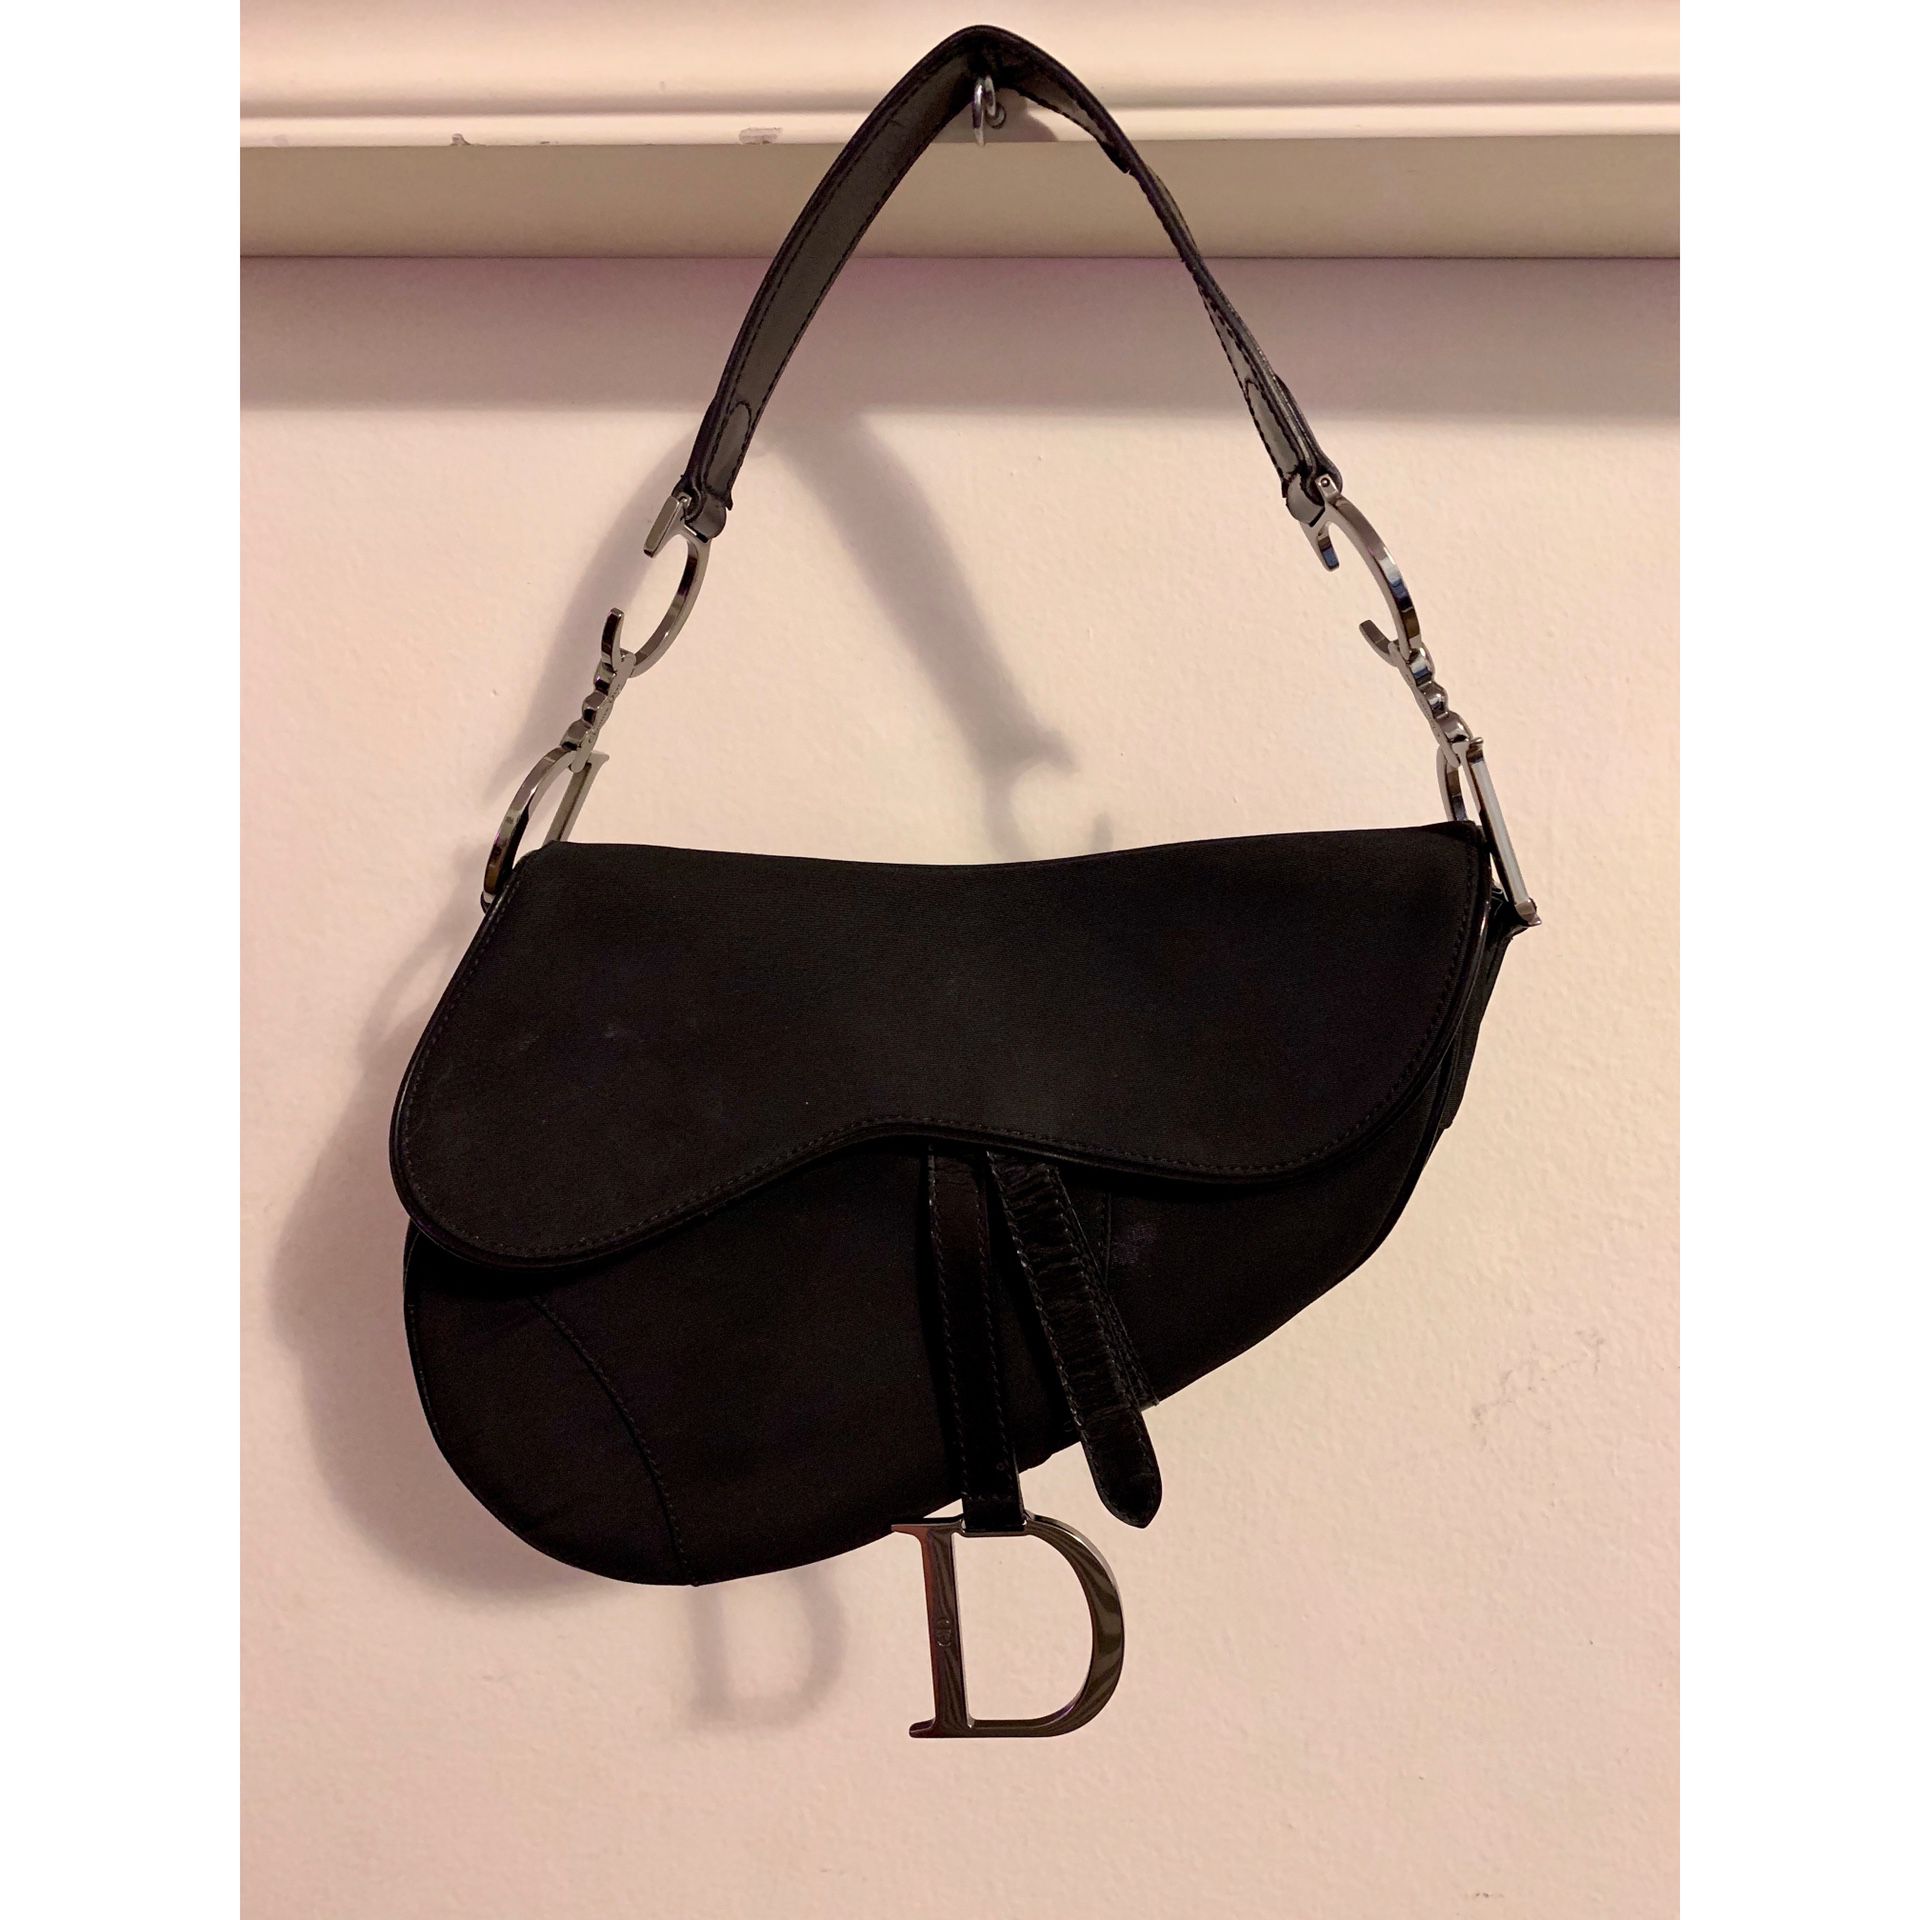 dior belt bag for Sale in North Haven, CT - OfferUp